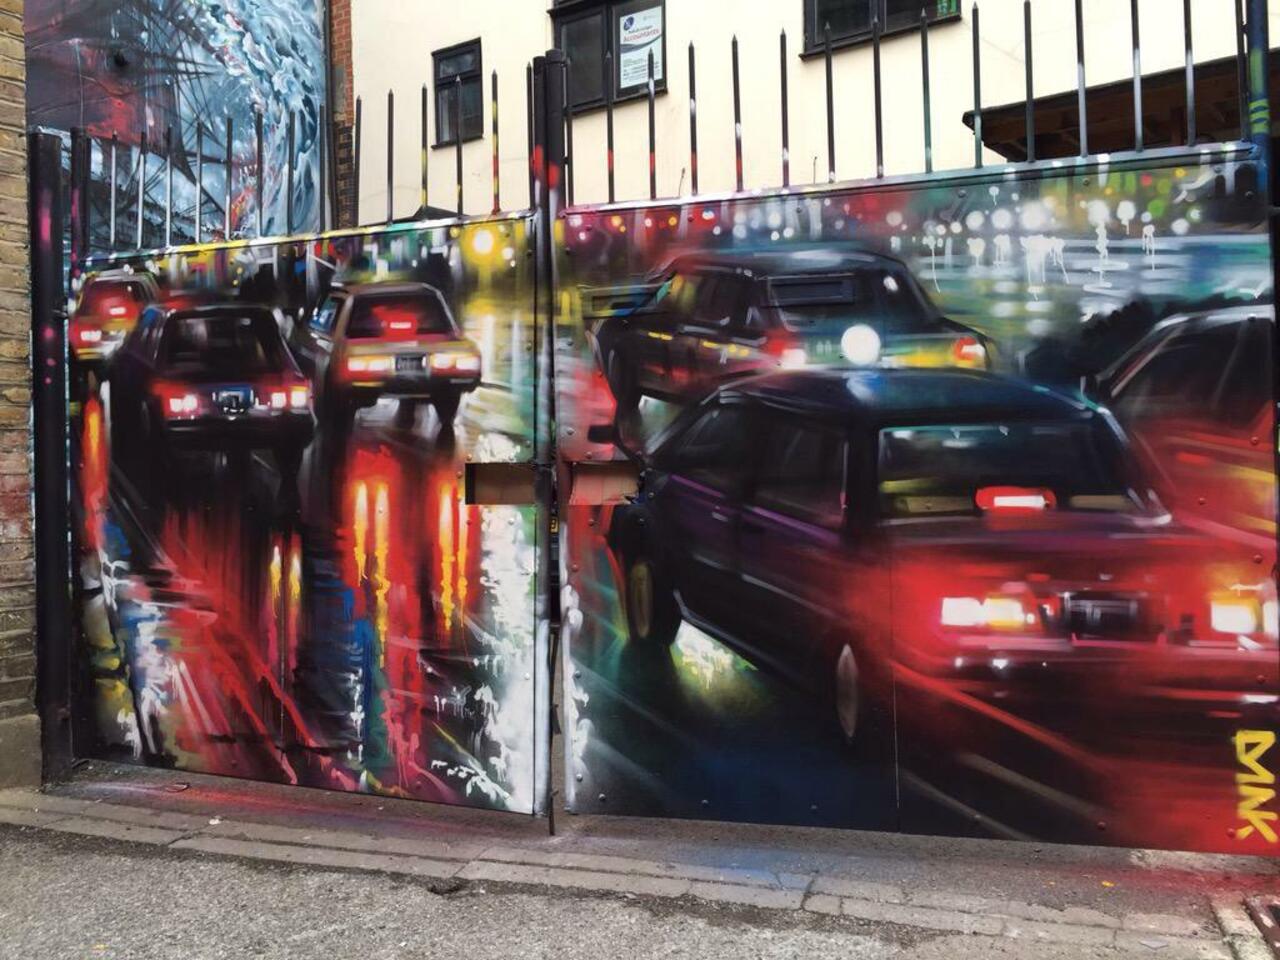 RT @75Mistinguette: putain quel talentStreet Art @GoogleStreetArt
 @DanKitchener in Brick Lane London 

#art #graffiti #mural #streetart http://t.co/BDNwWvQwdP